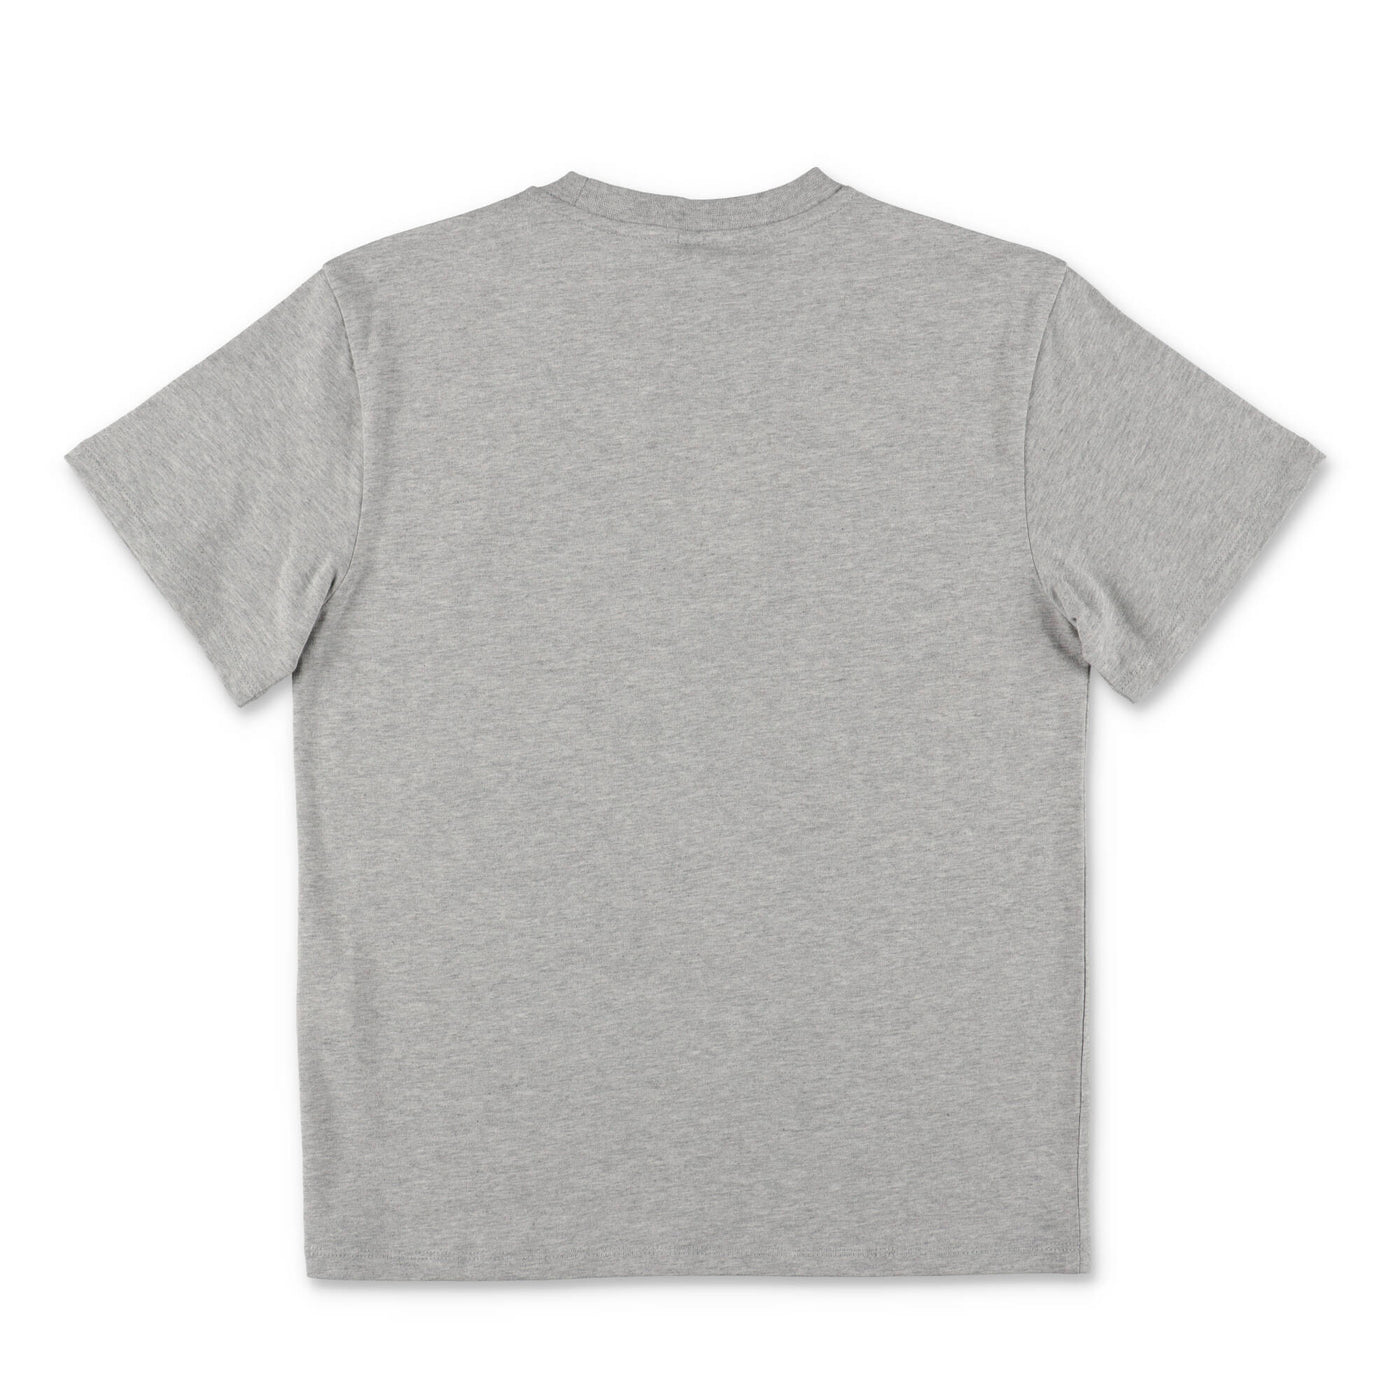 Grey cotton jersey boy STELLA McCARTNEY t-shirt | Carofiglio Junior